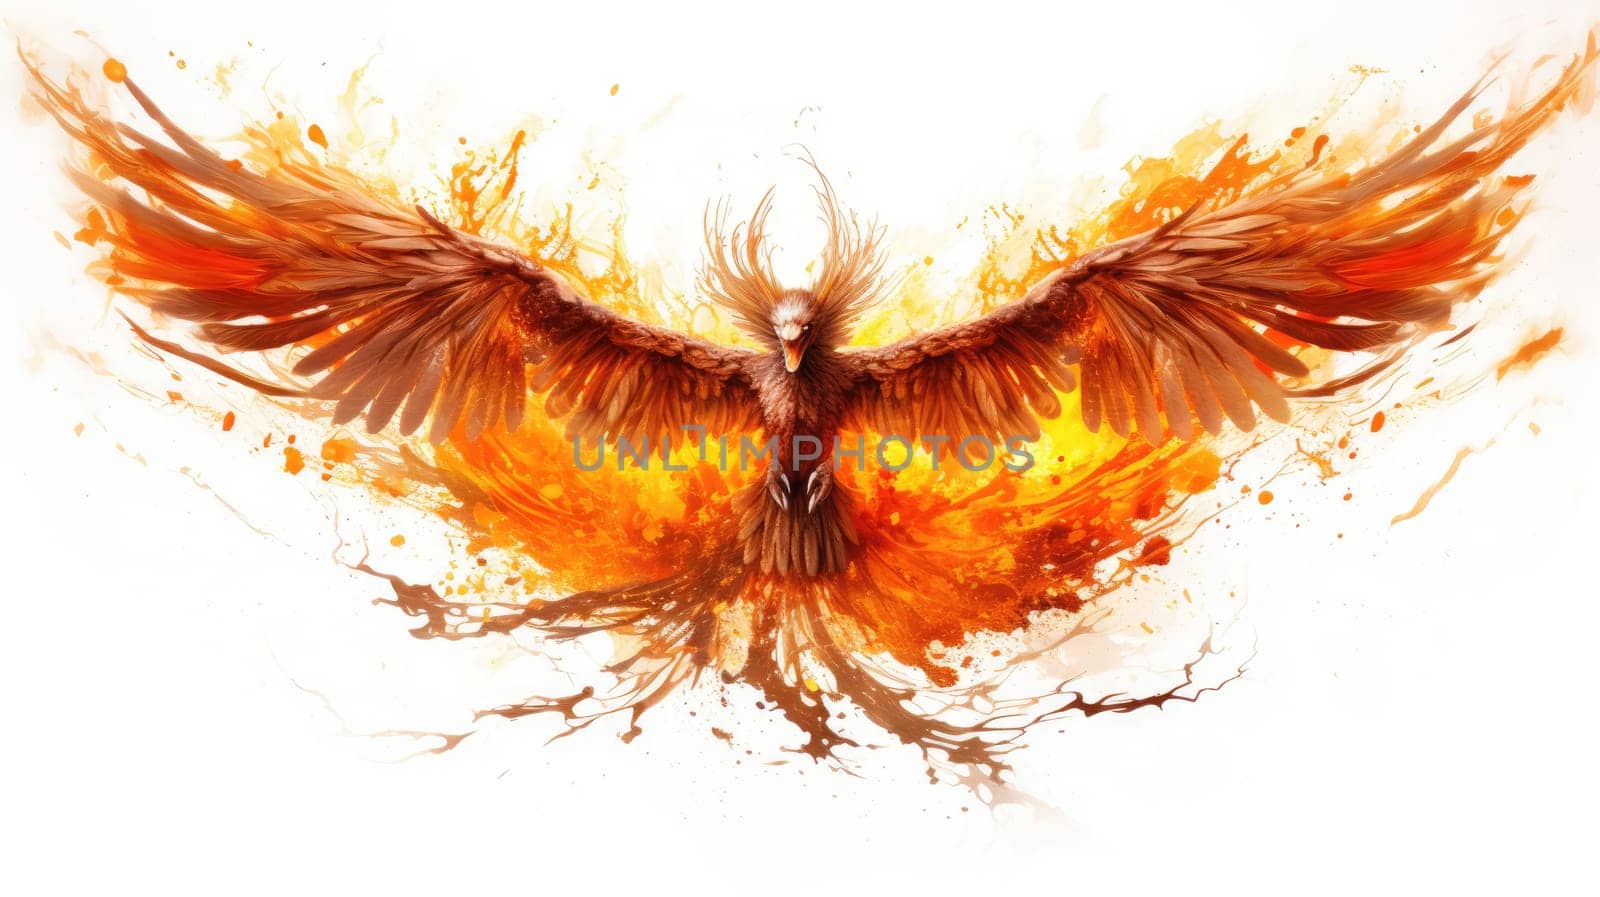 Molten phoenix watercolor illustration - AI generated. Molten, phoenix, fire, wings.